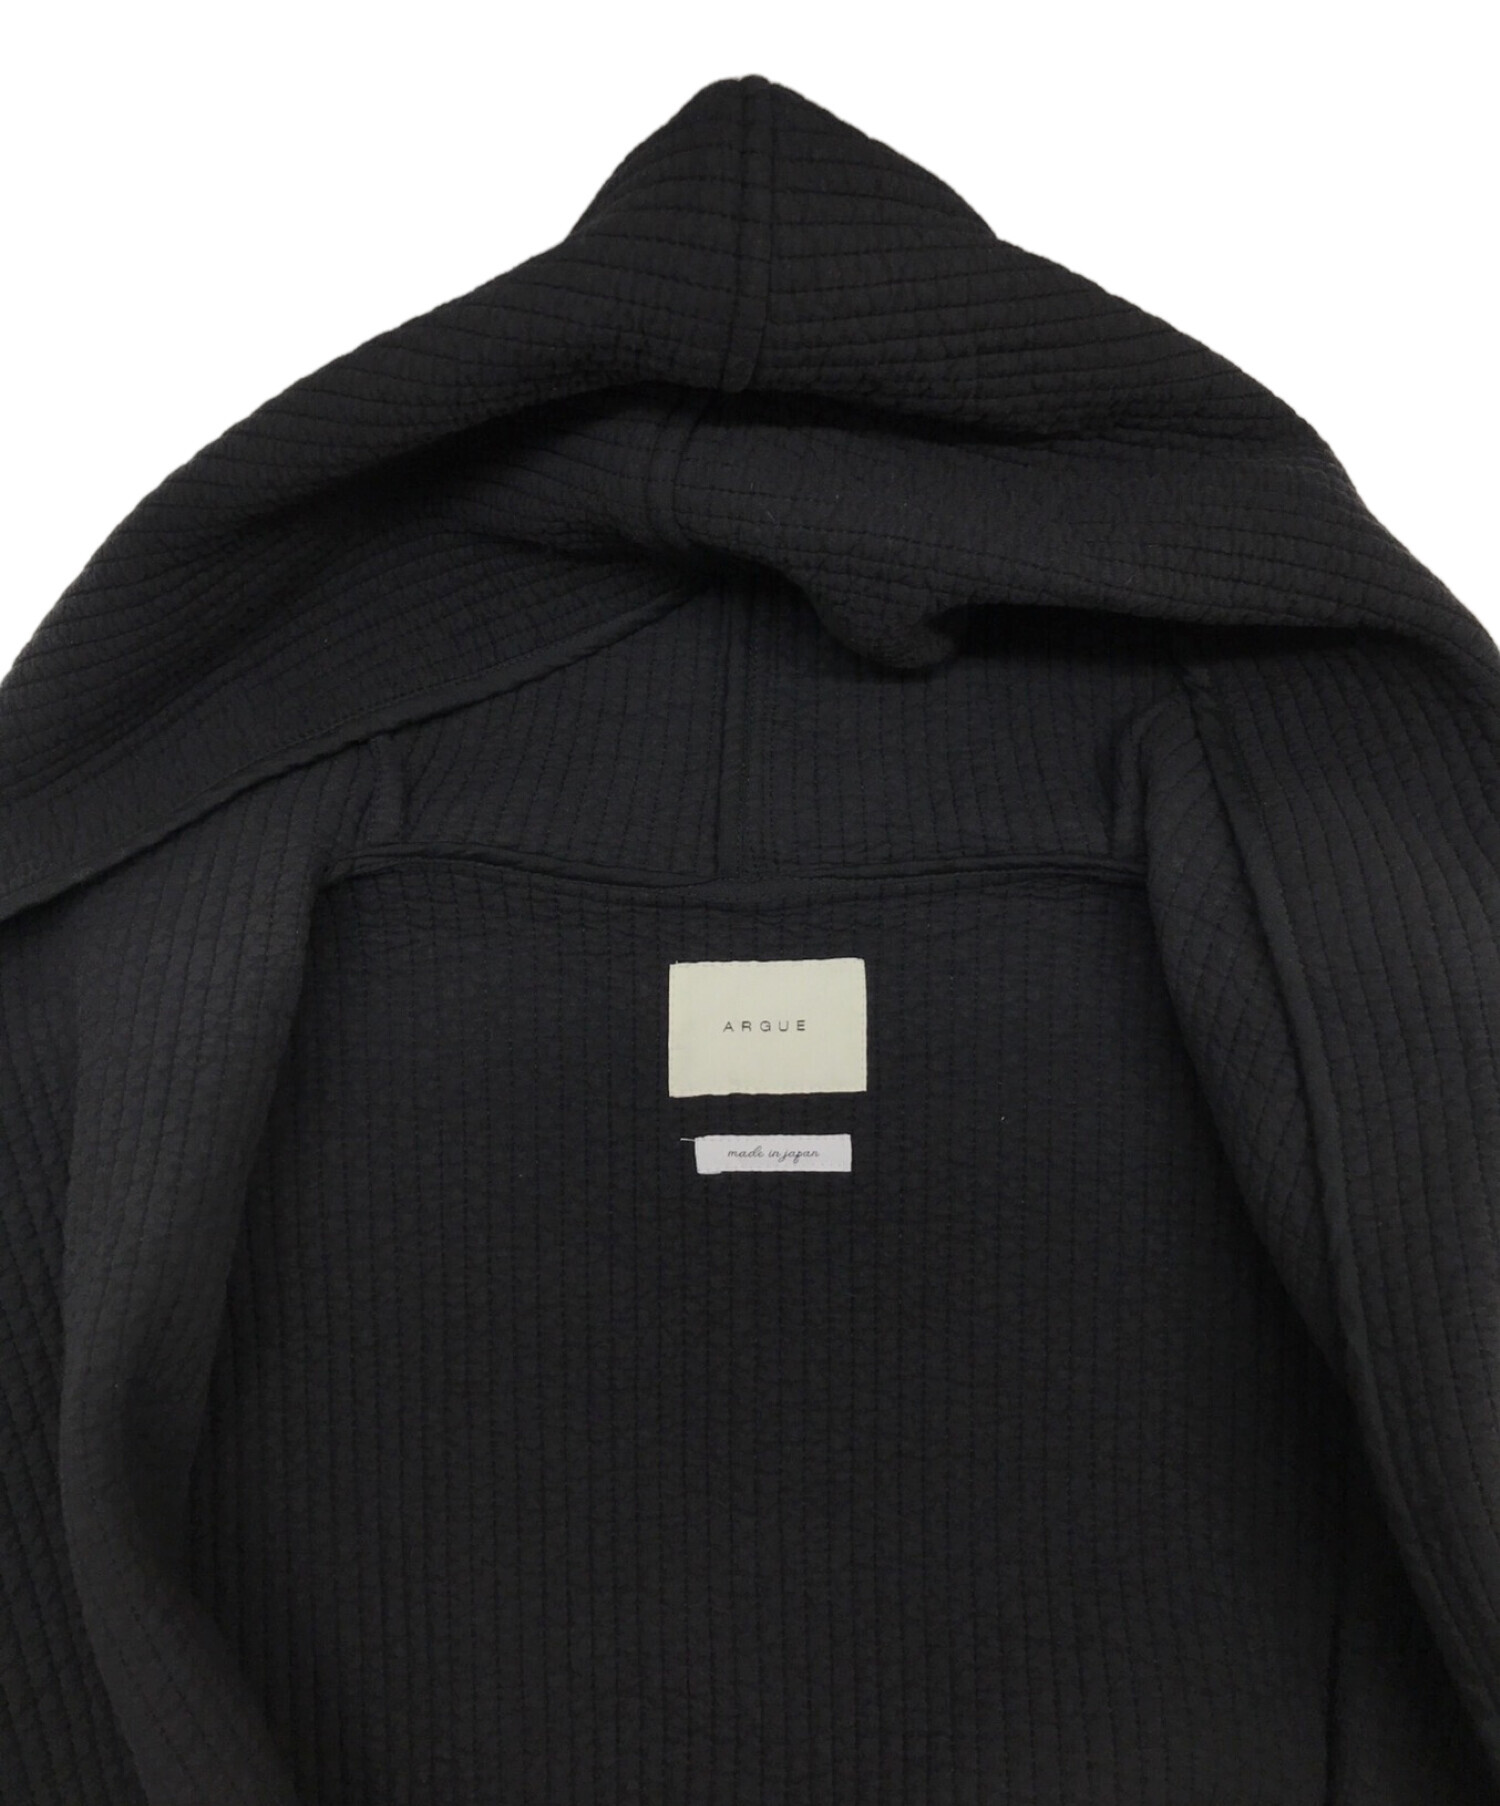 ARGUE (アギュー) cotton kendo foodie coat ブラック サイズ:FREE